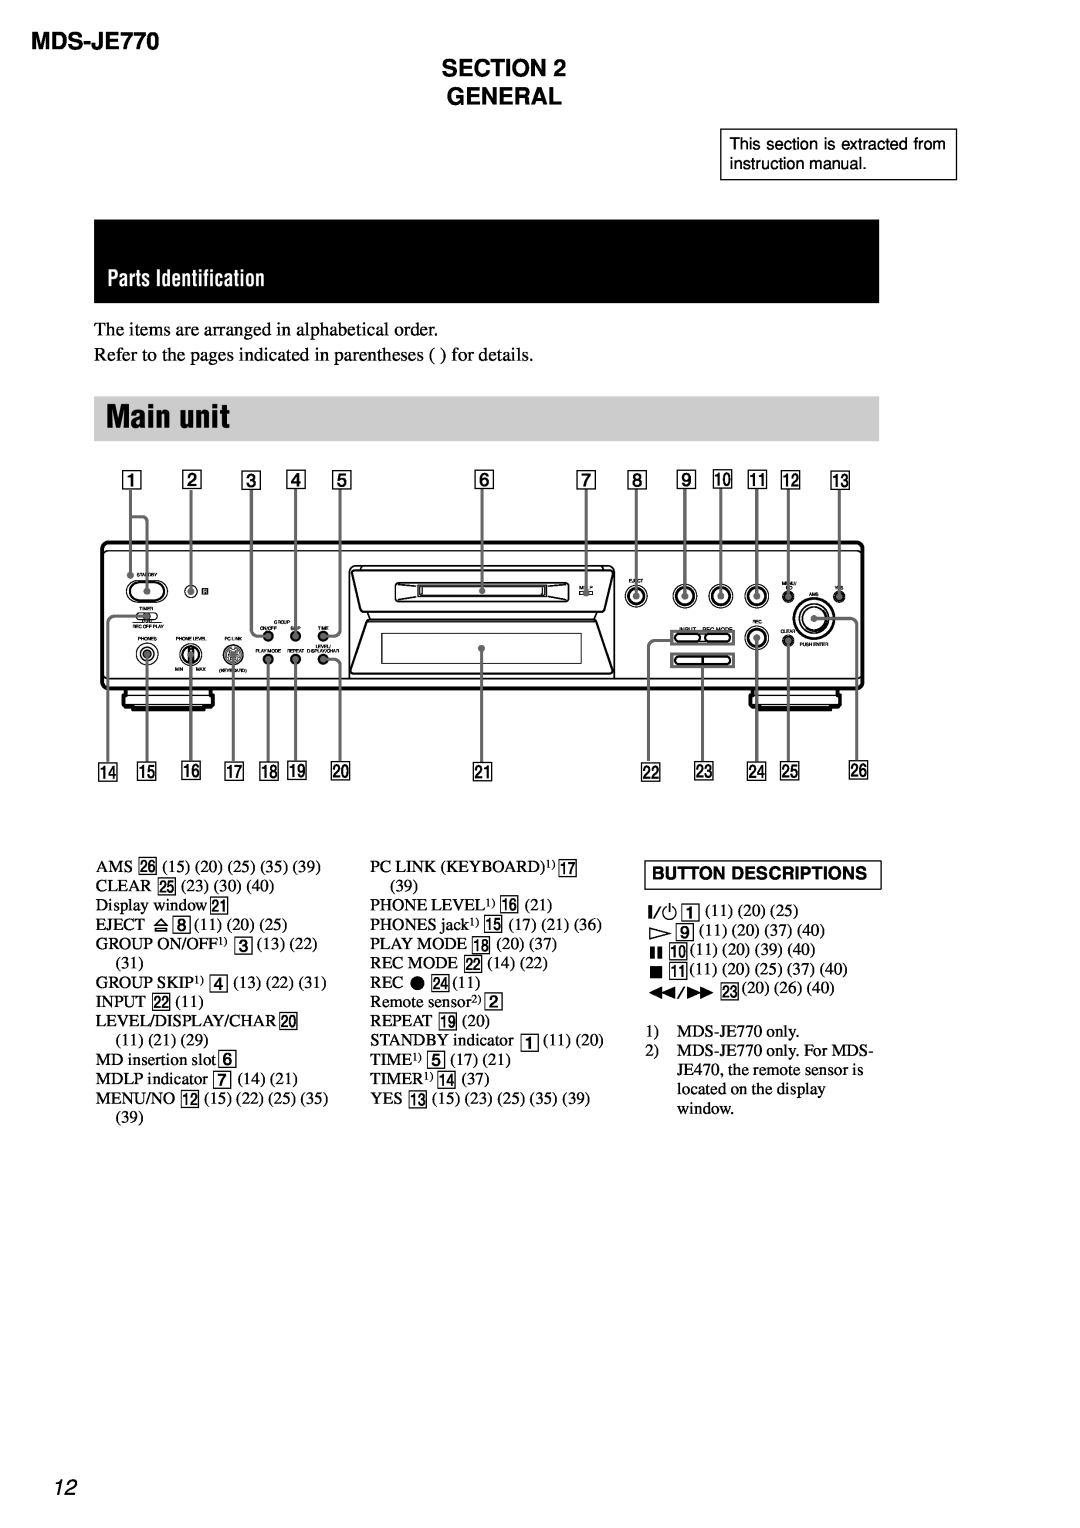 Sony MDS-JE770 SECTION GENERAL, Button Descriptions, Main unit, Parts Identification, 6 7 8 9 0 qa qs qd, ws wd wf wg 